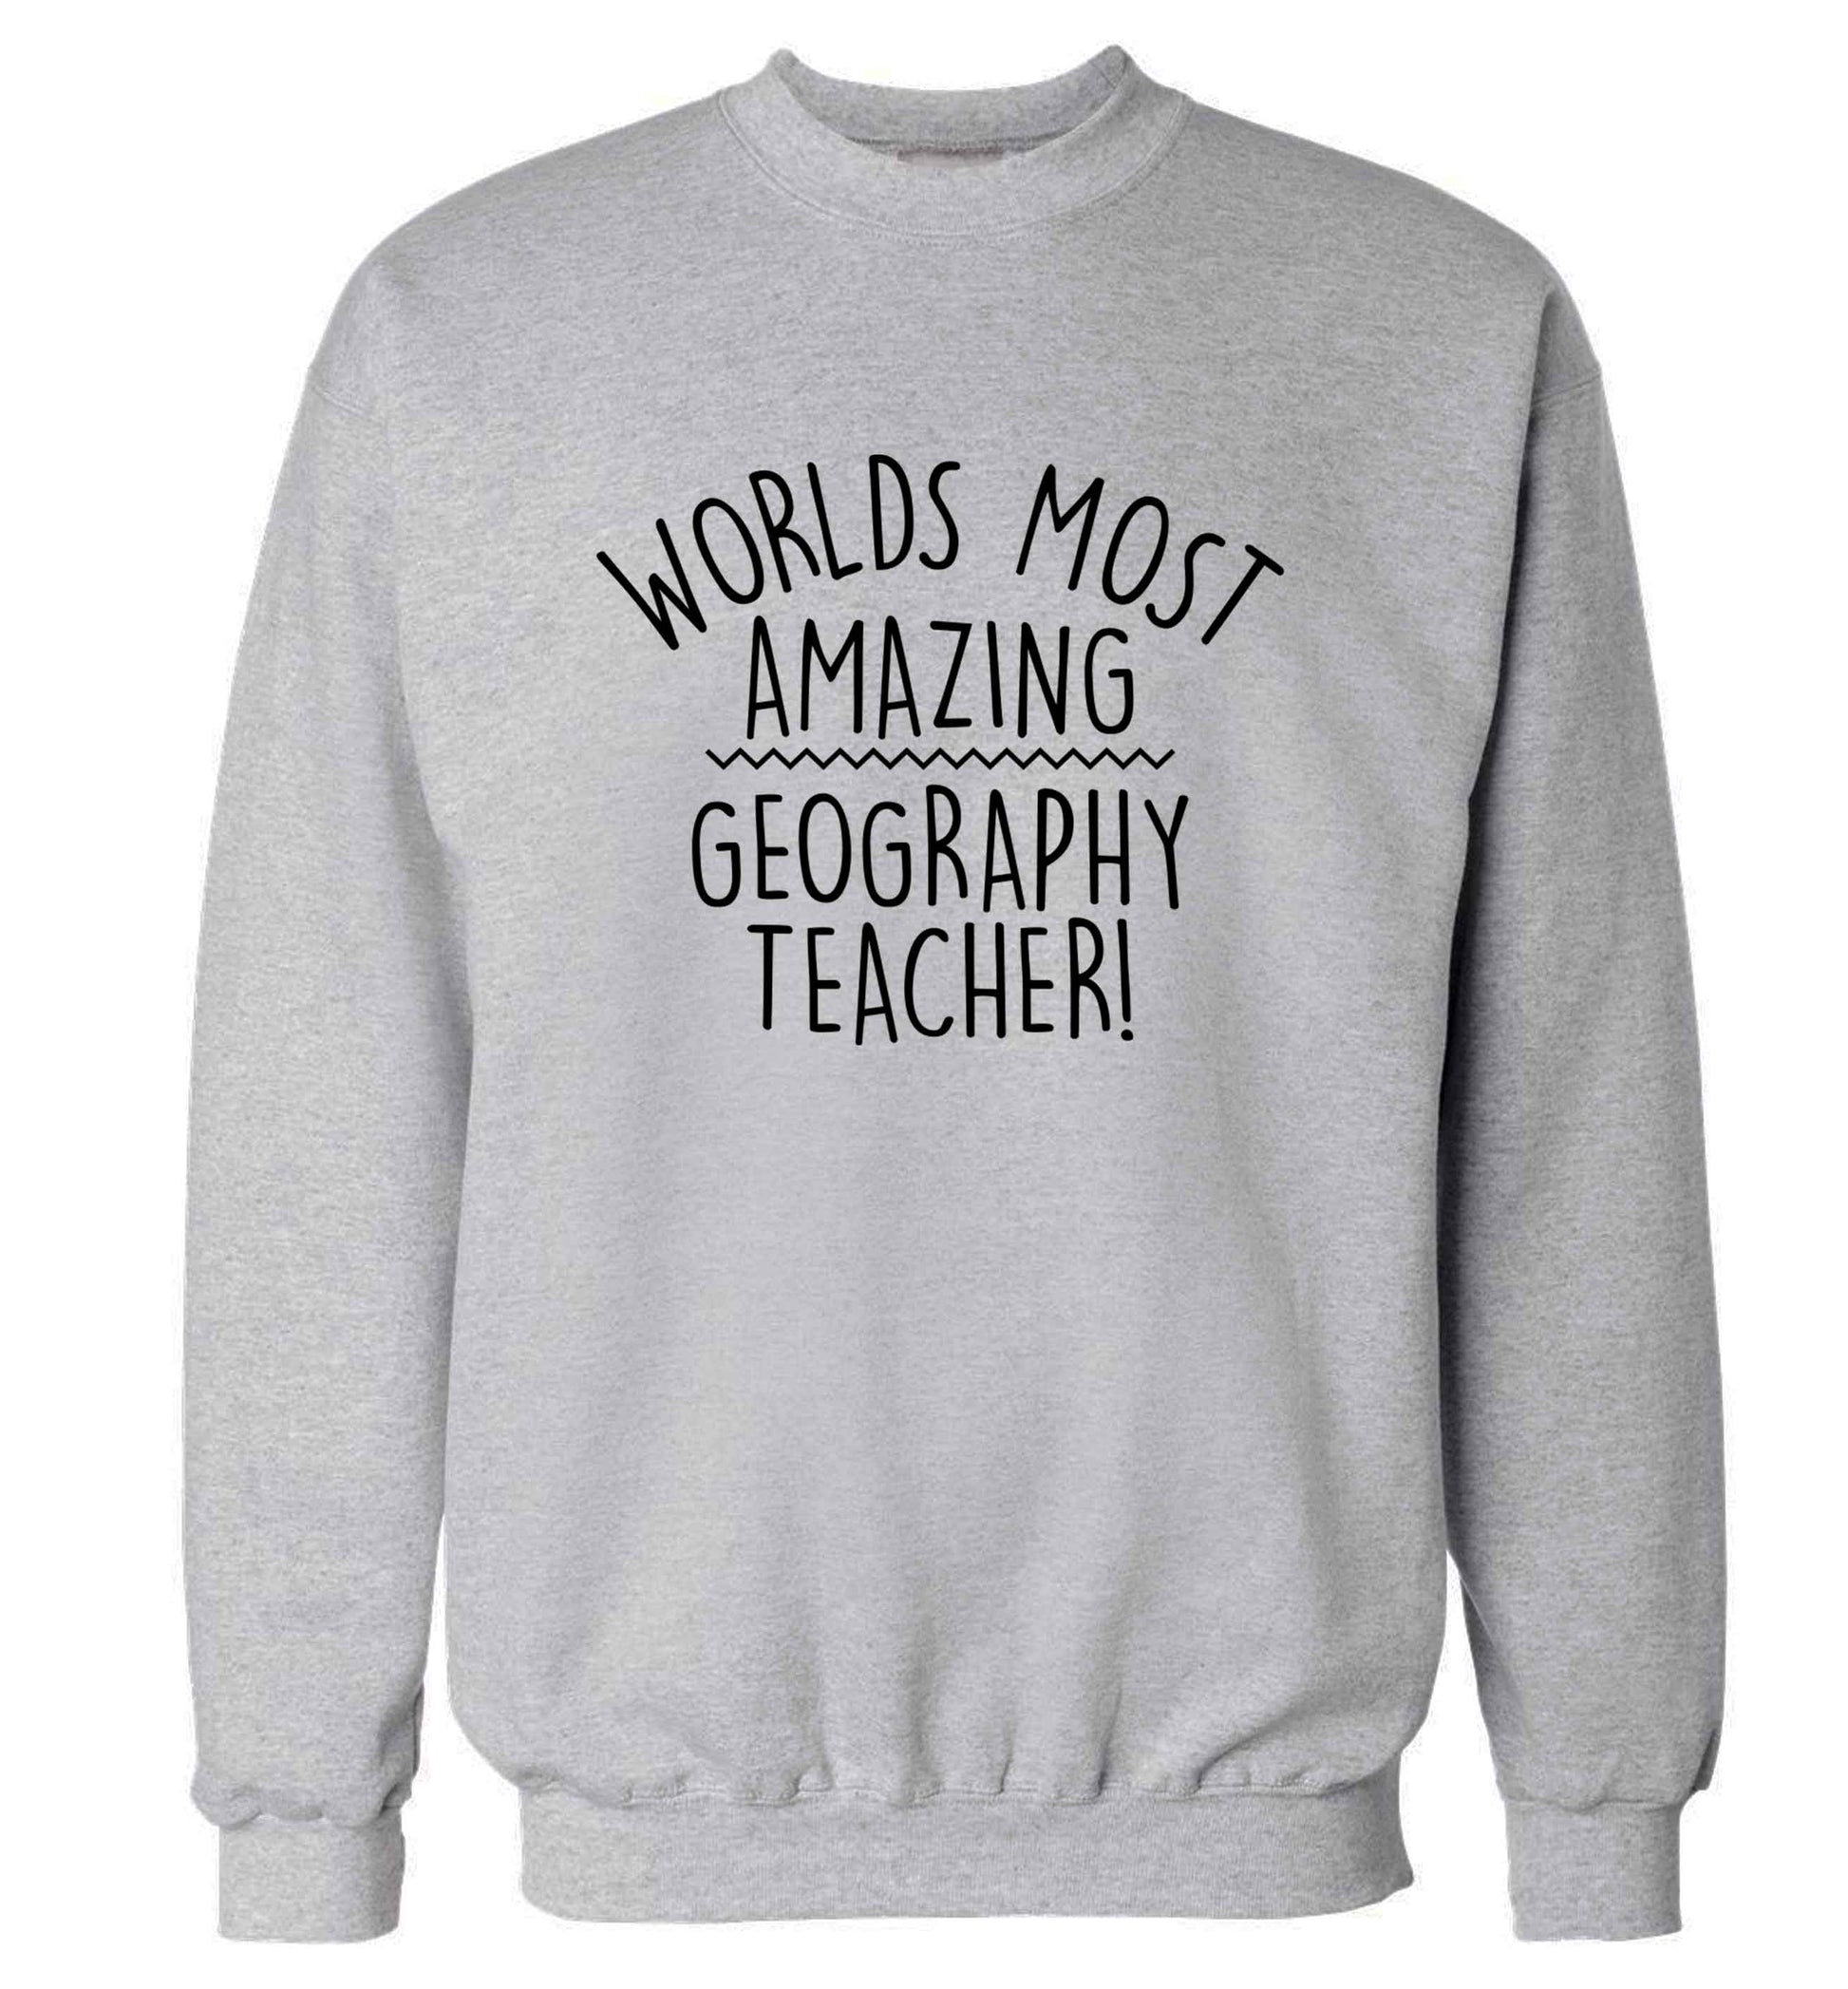 Worlds most amazing geography teacher adult's unisex grey sweater 2XL